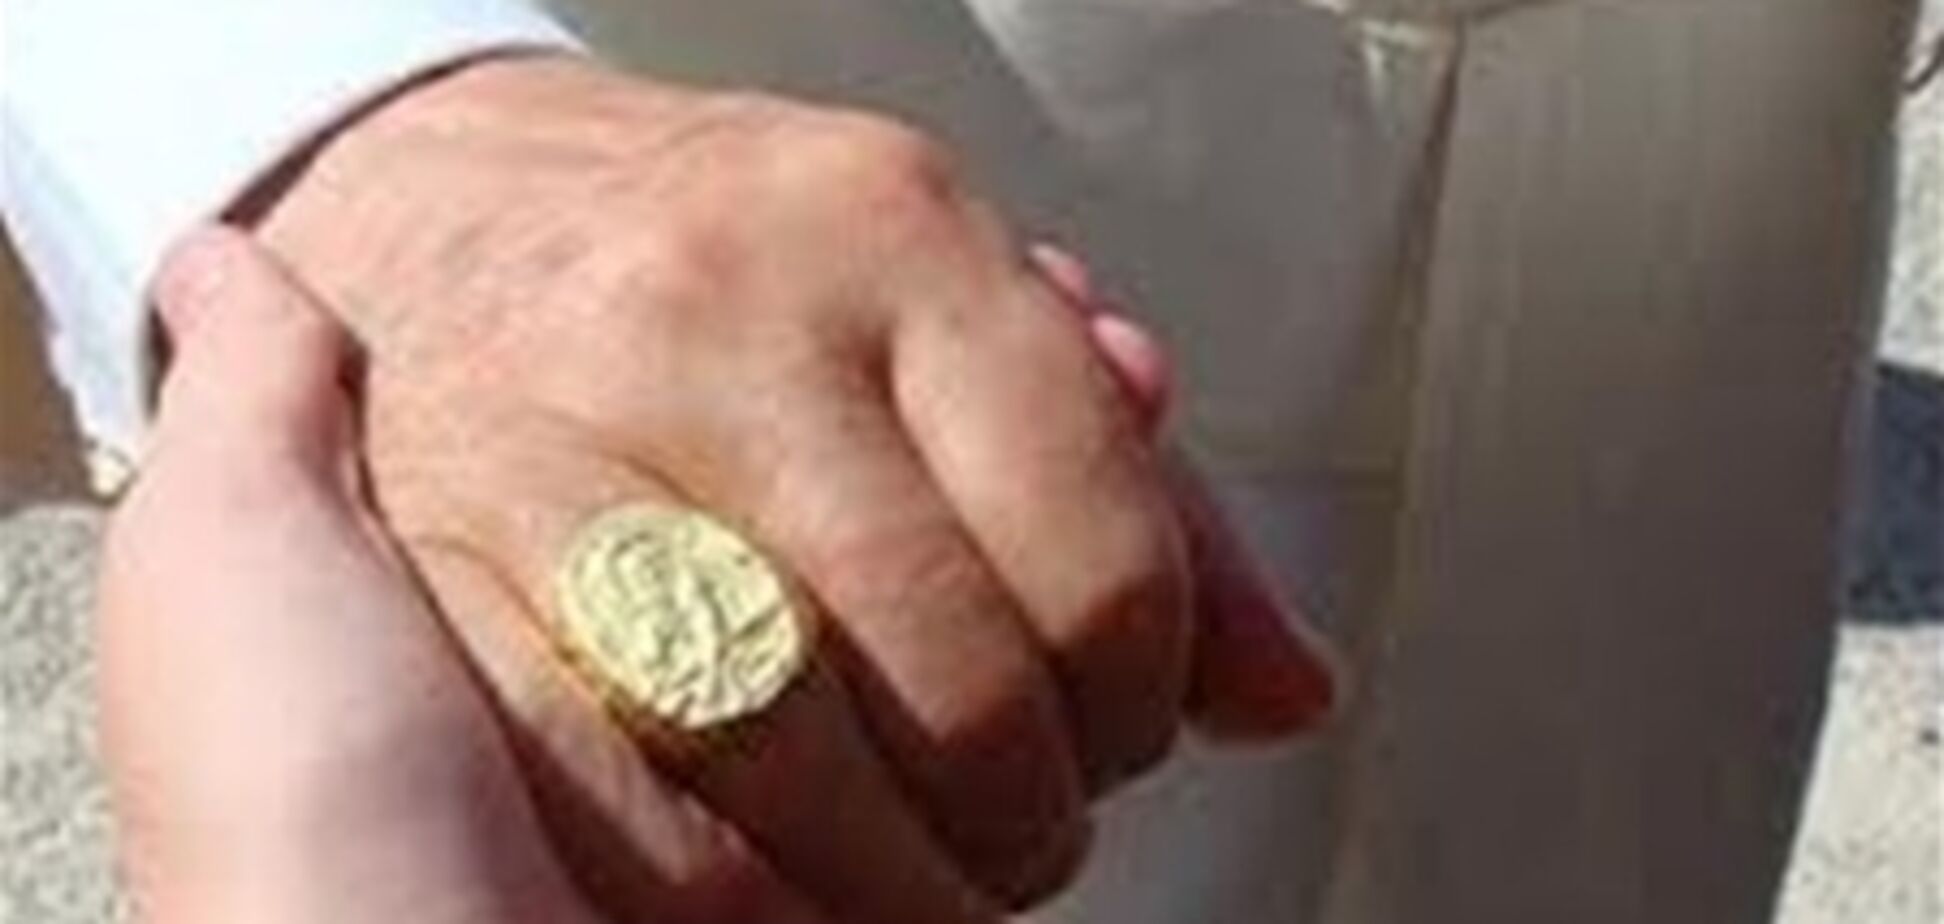 После отставки у Бенедикта XVI отберут кольцо, туфли и назовут 'пенсионером'